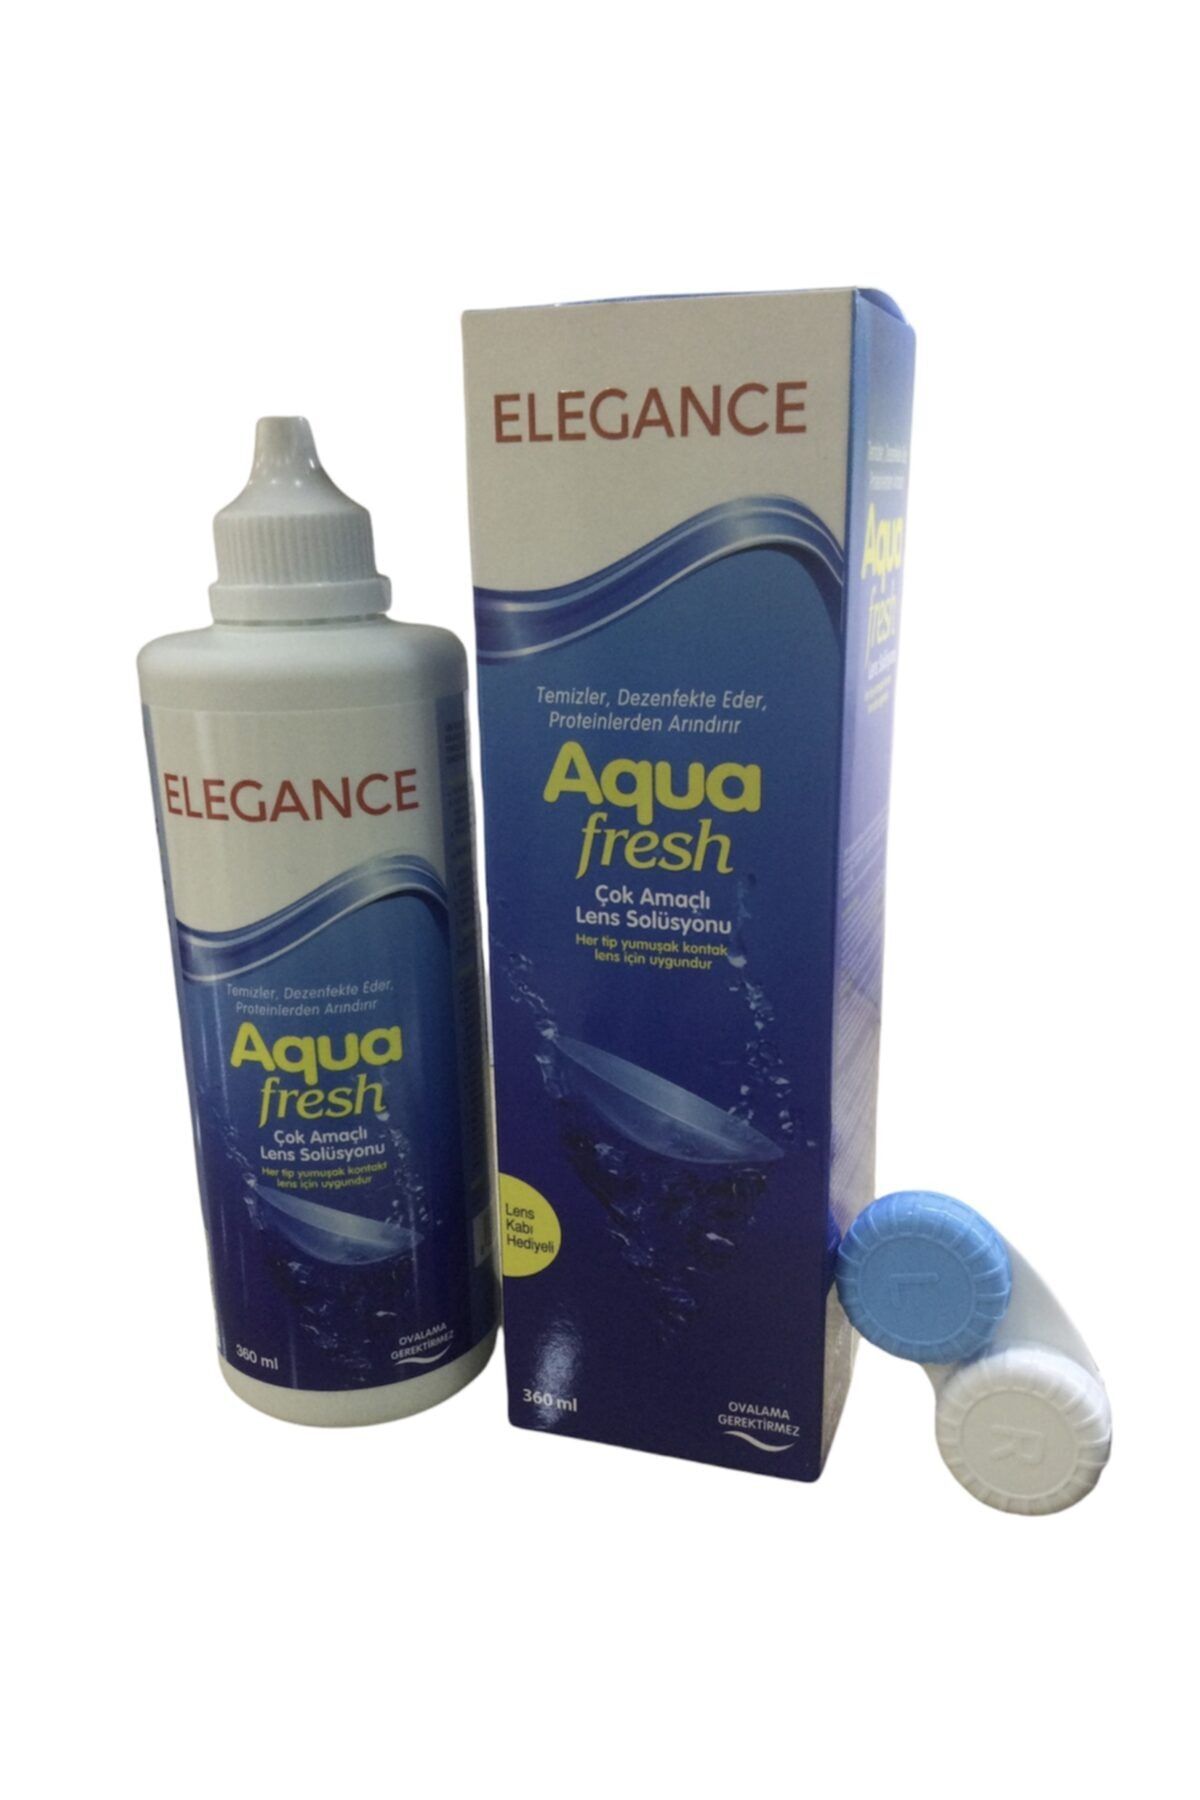 Elegance Aqua Fresh 360ml